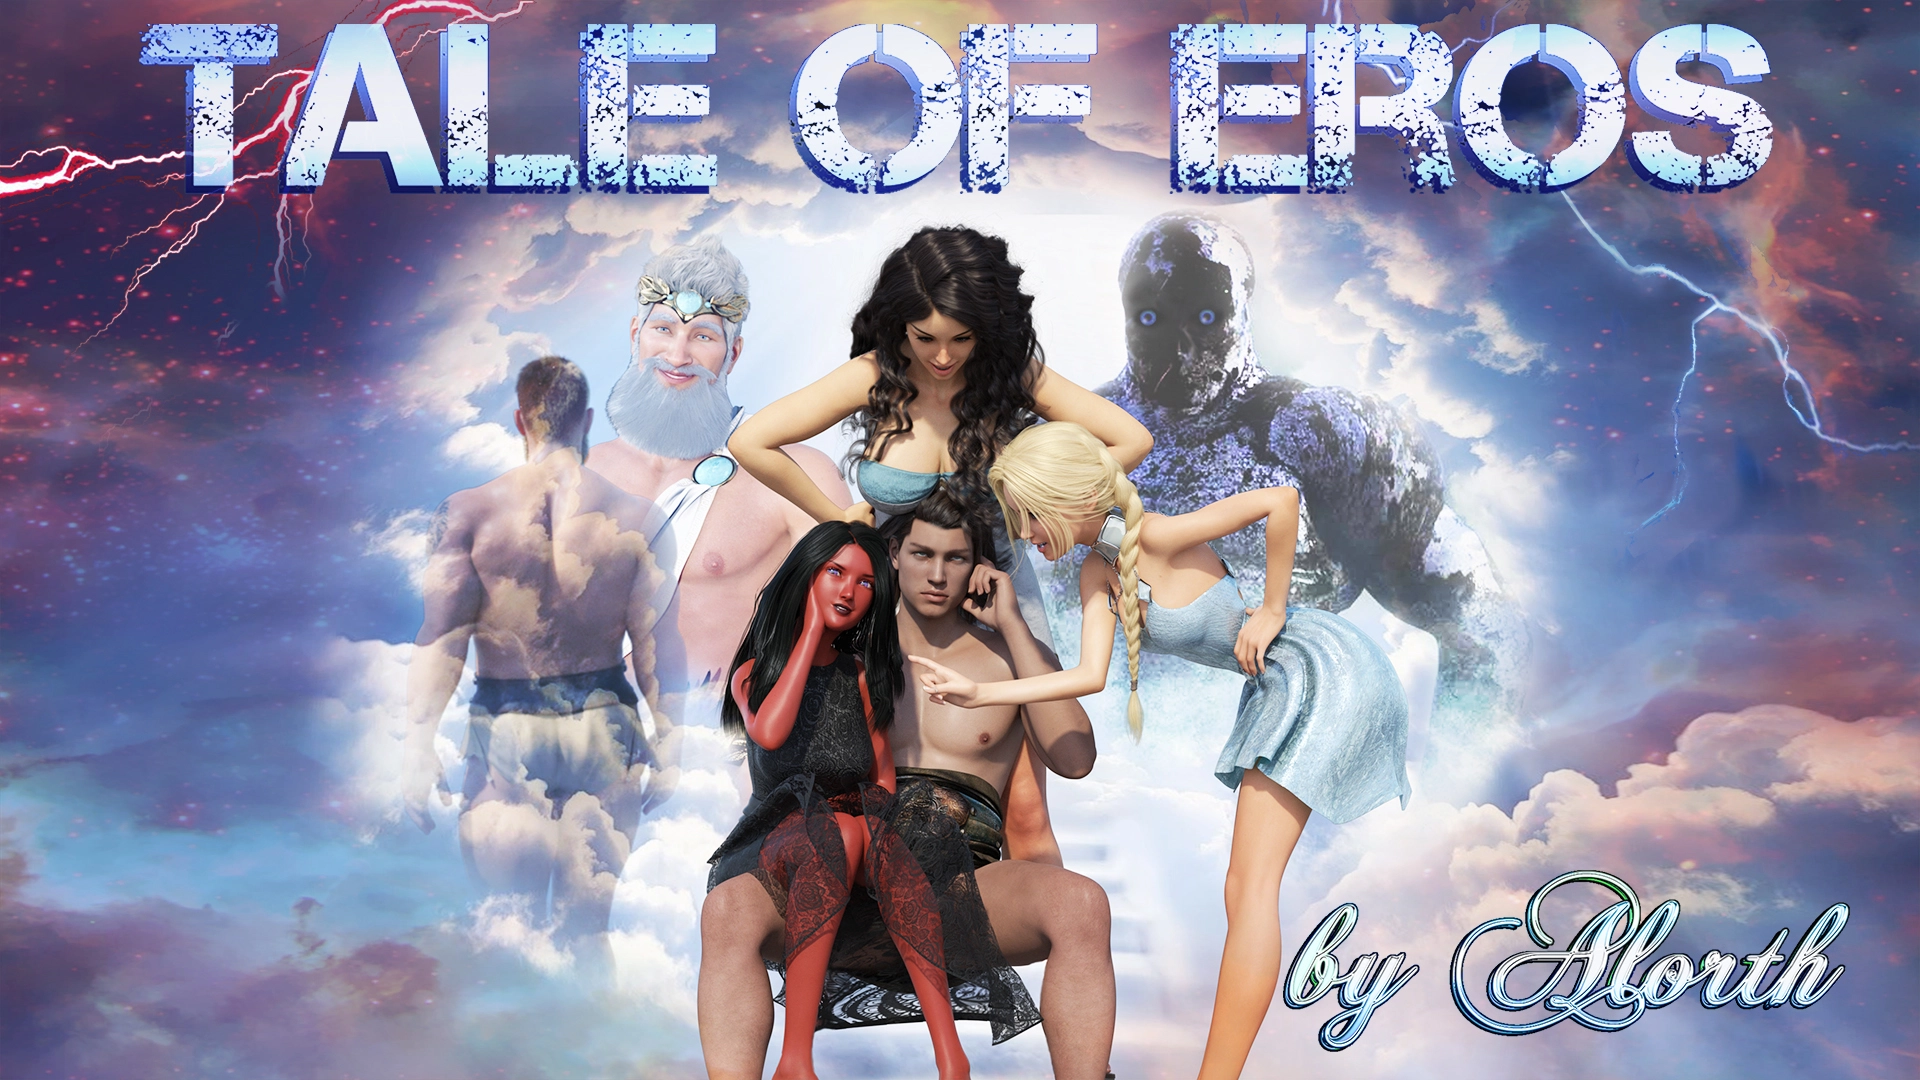 Tale Of Eros main image